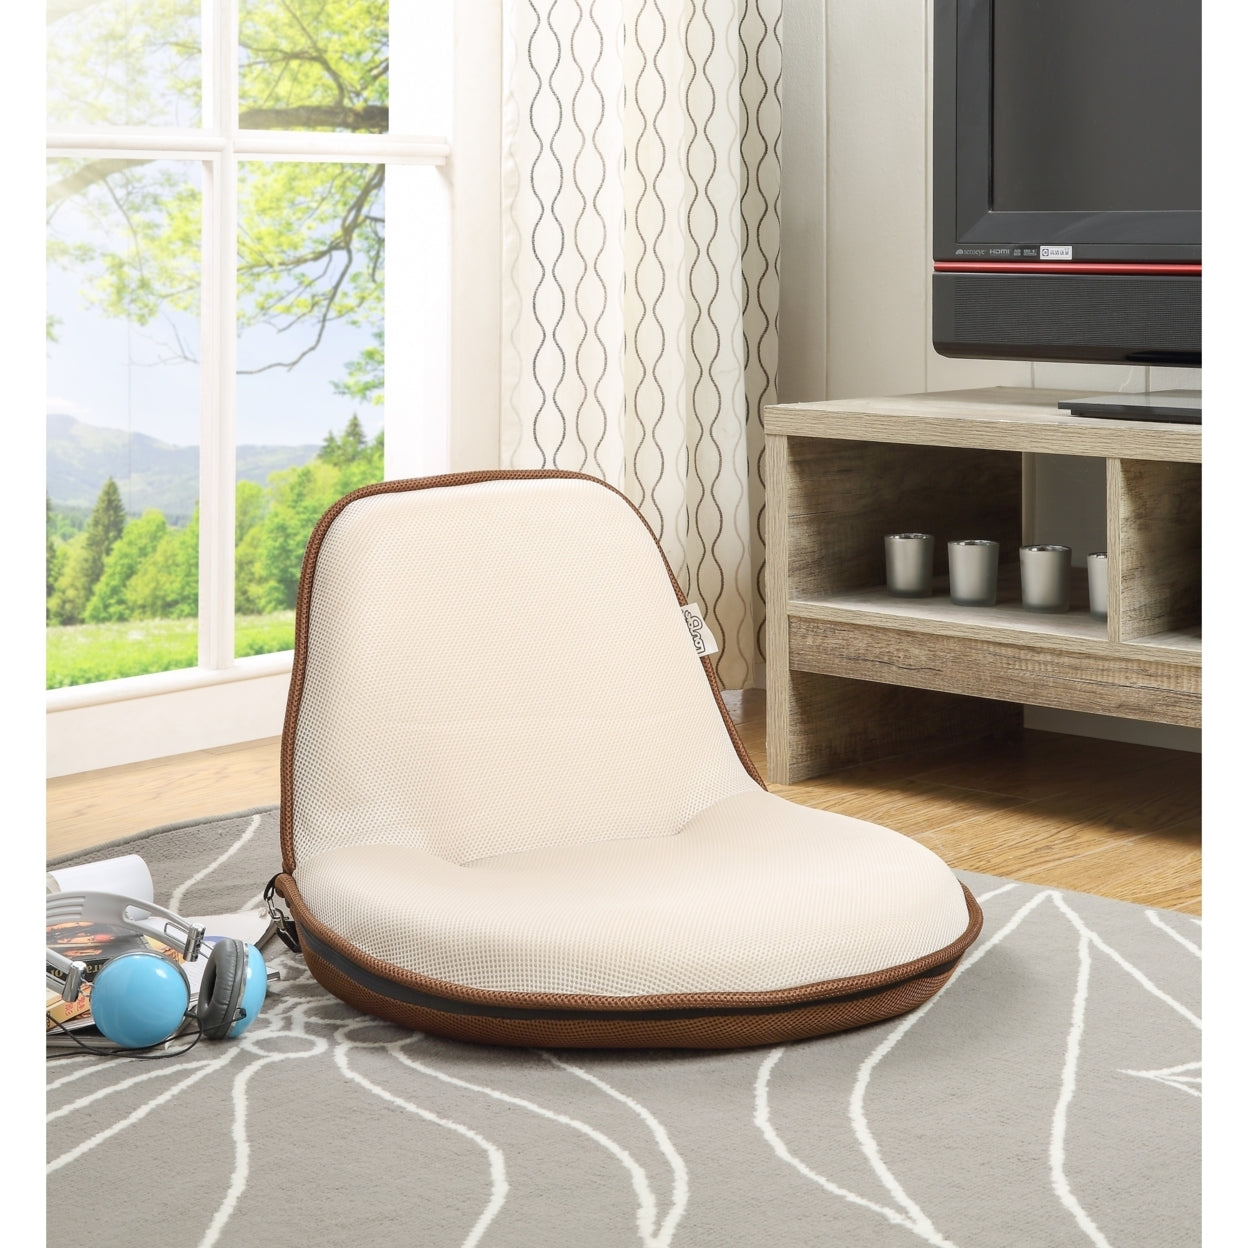 Loungie Quickchair Indoor/Outdoor Portable Foldable Mesh Floor Chair